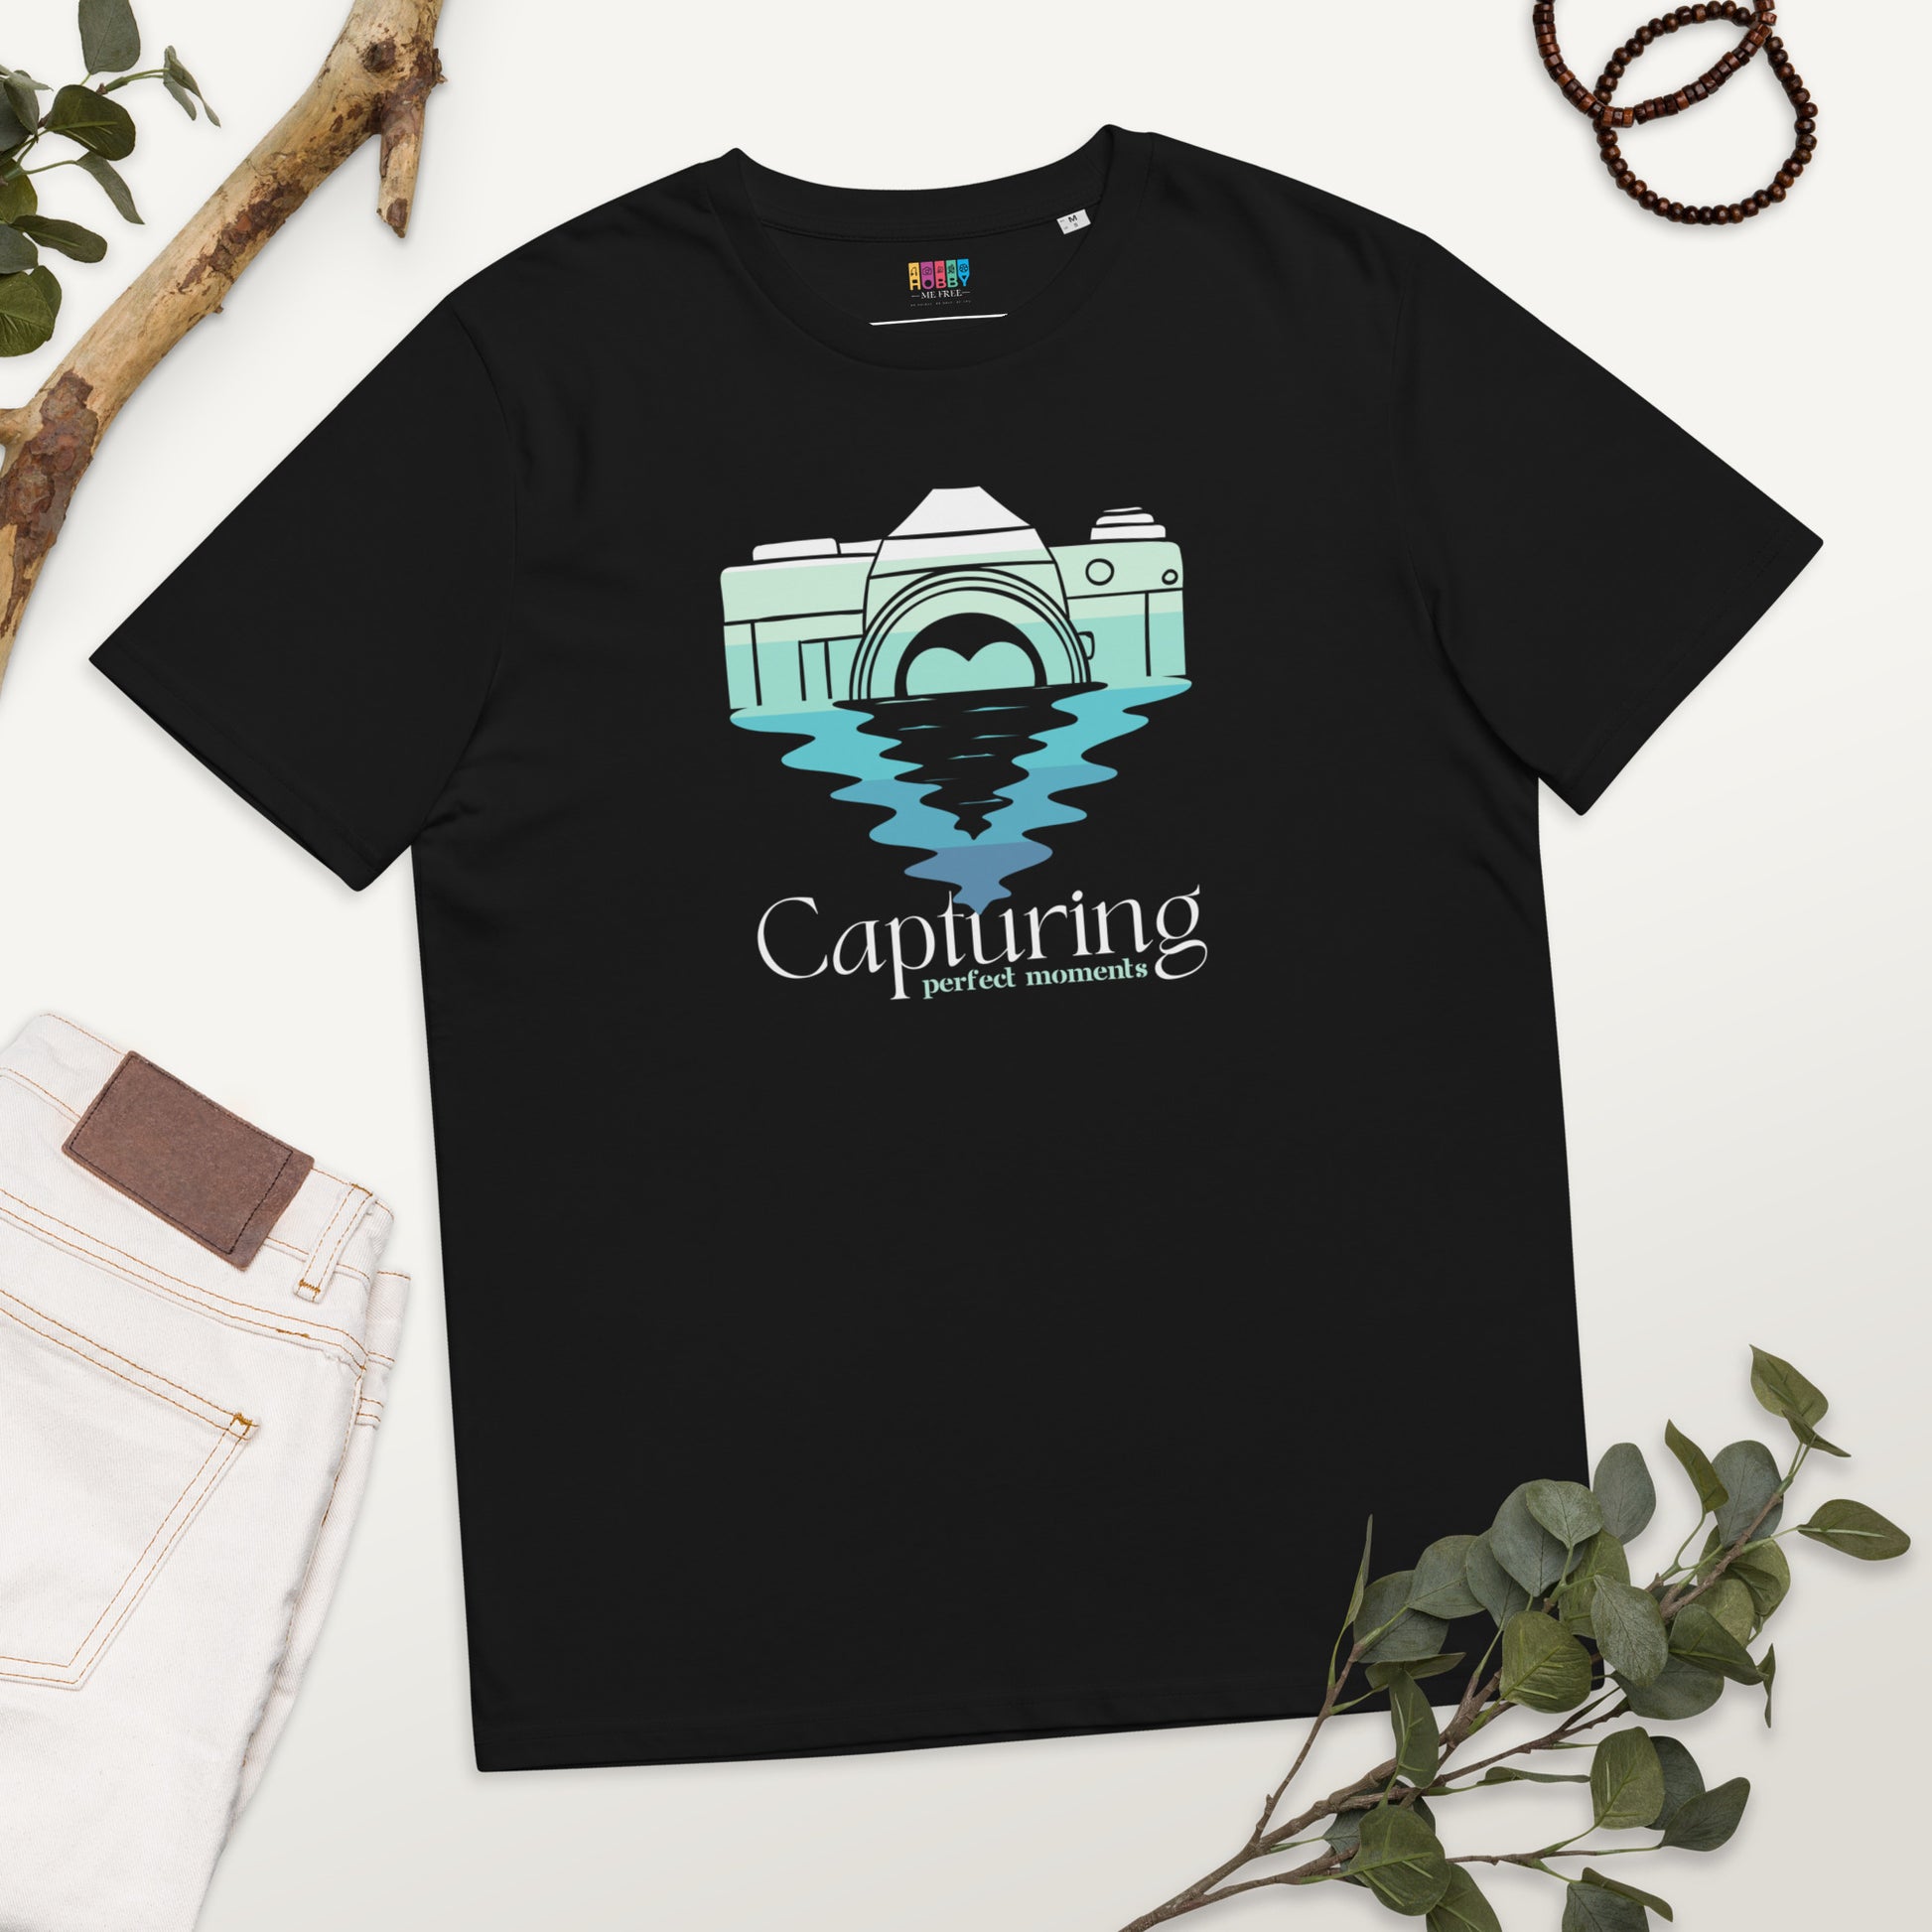 Custom Made 100% cotton T-Shirt for Hobby Photographers. Black